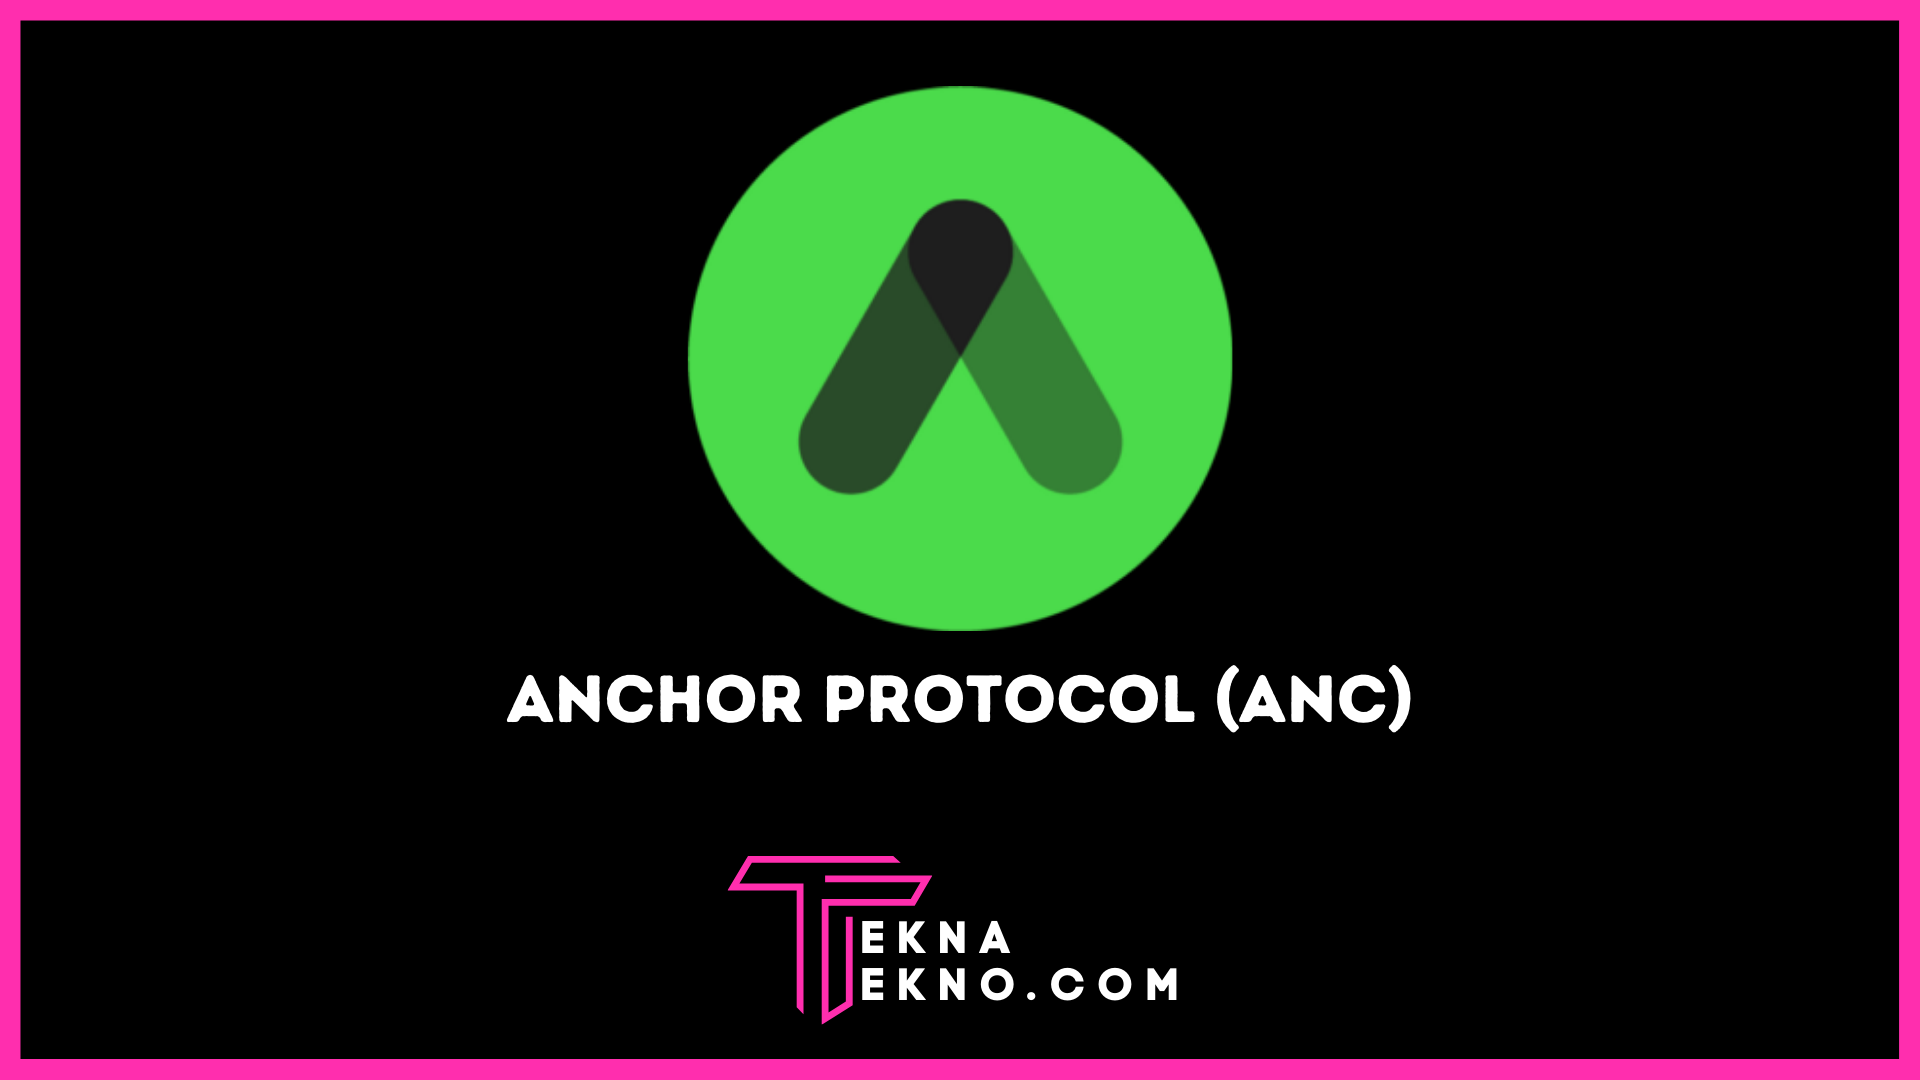 Anchor Protocol (ANC), Aset Kripto yang Beroperasi Di Blockchain Terra